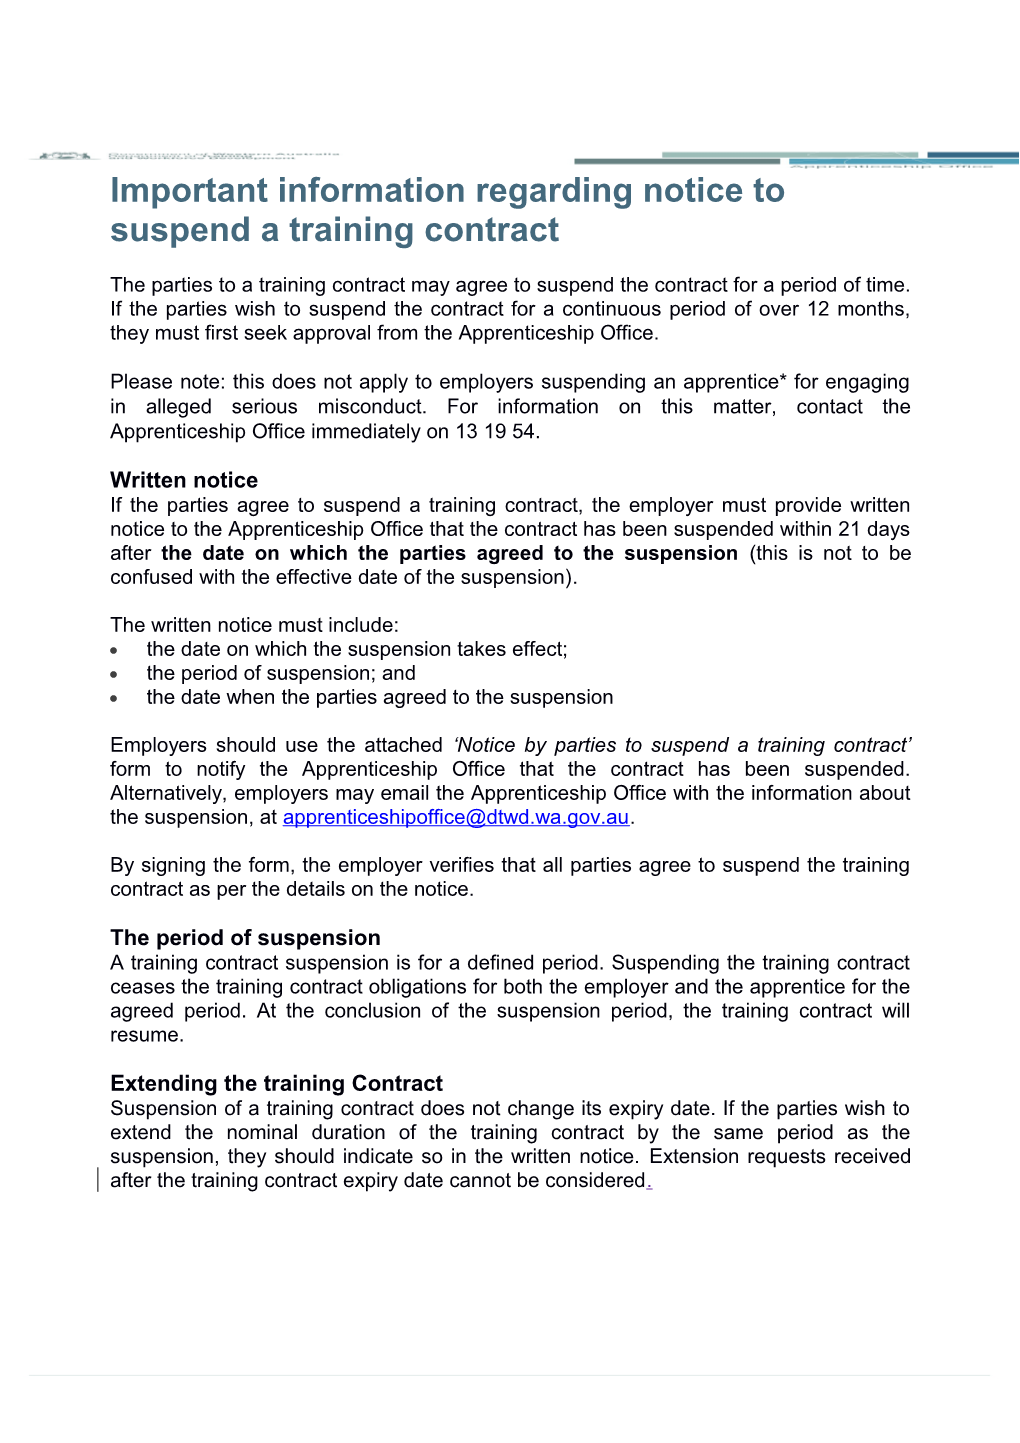 Important Information Regarding Notice to Suspend a Training Contract